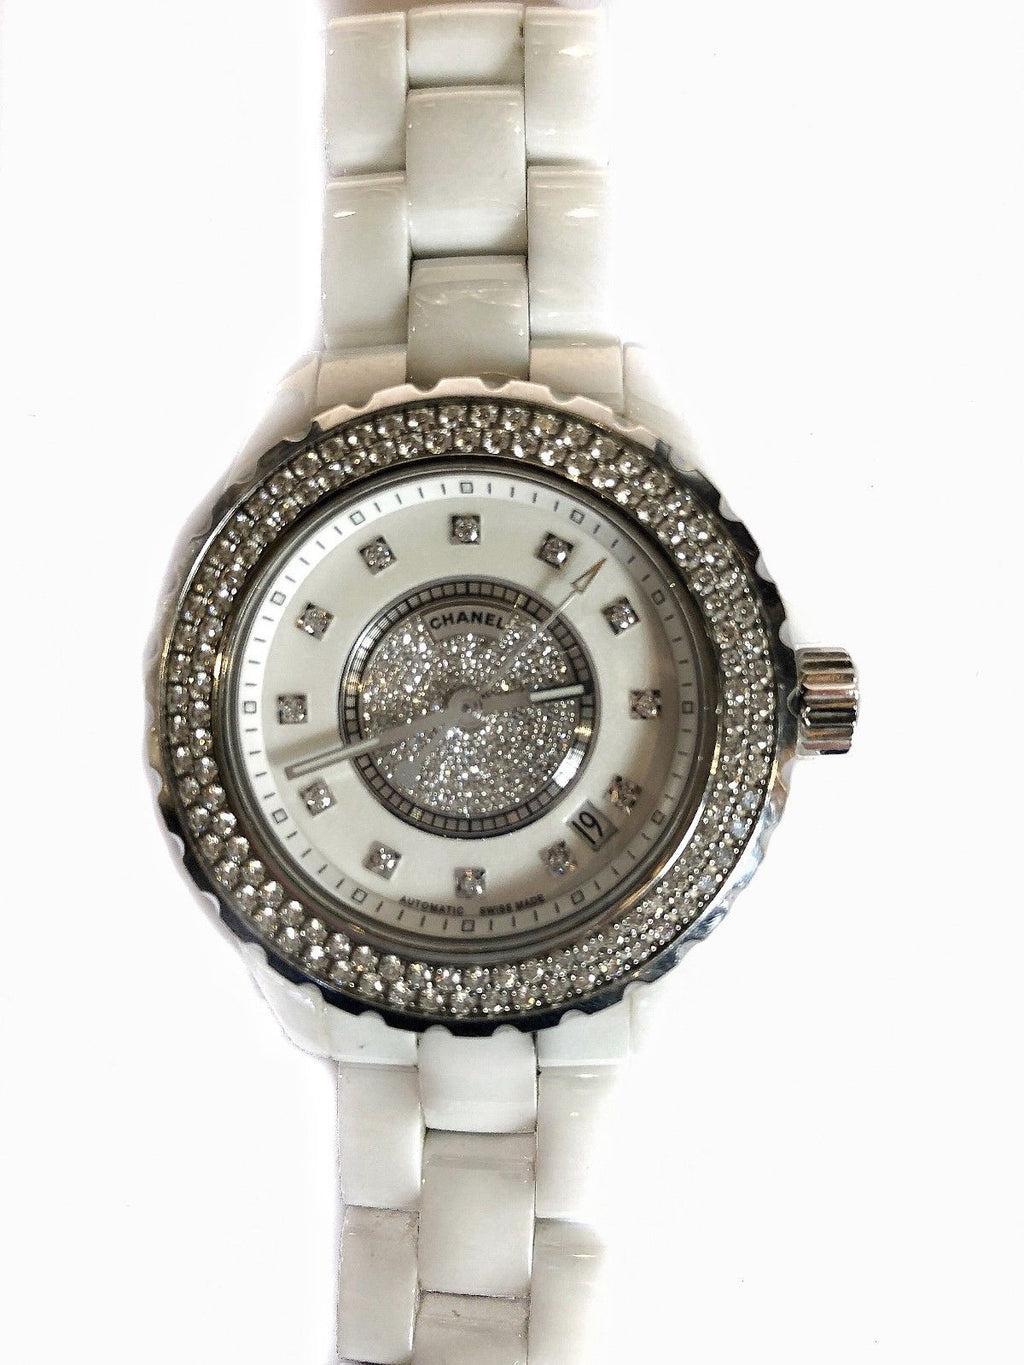 Antique, Estate & Consignment Chanel J12 Diamond White Ceramic Watch 575-83  - Hurdle's Jewelry